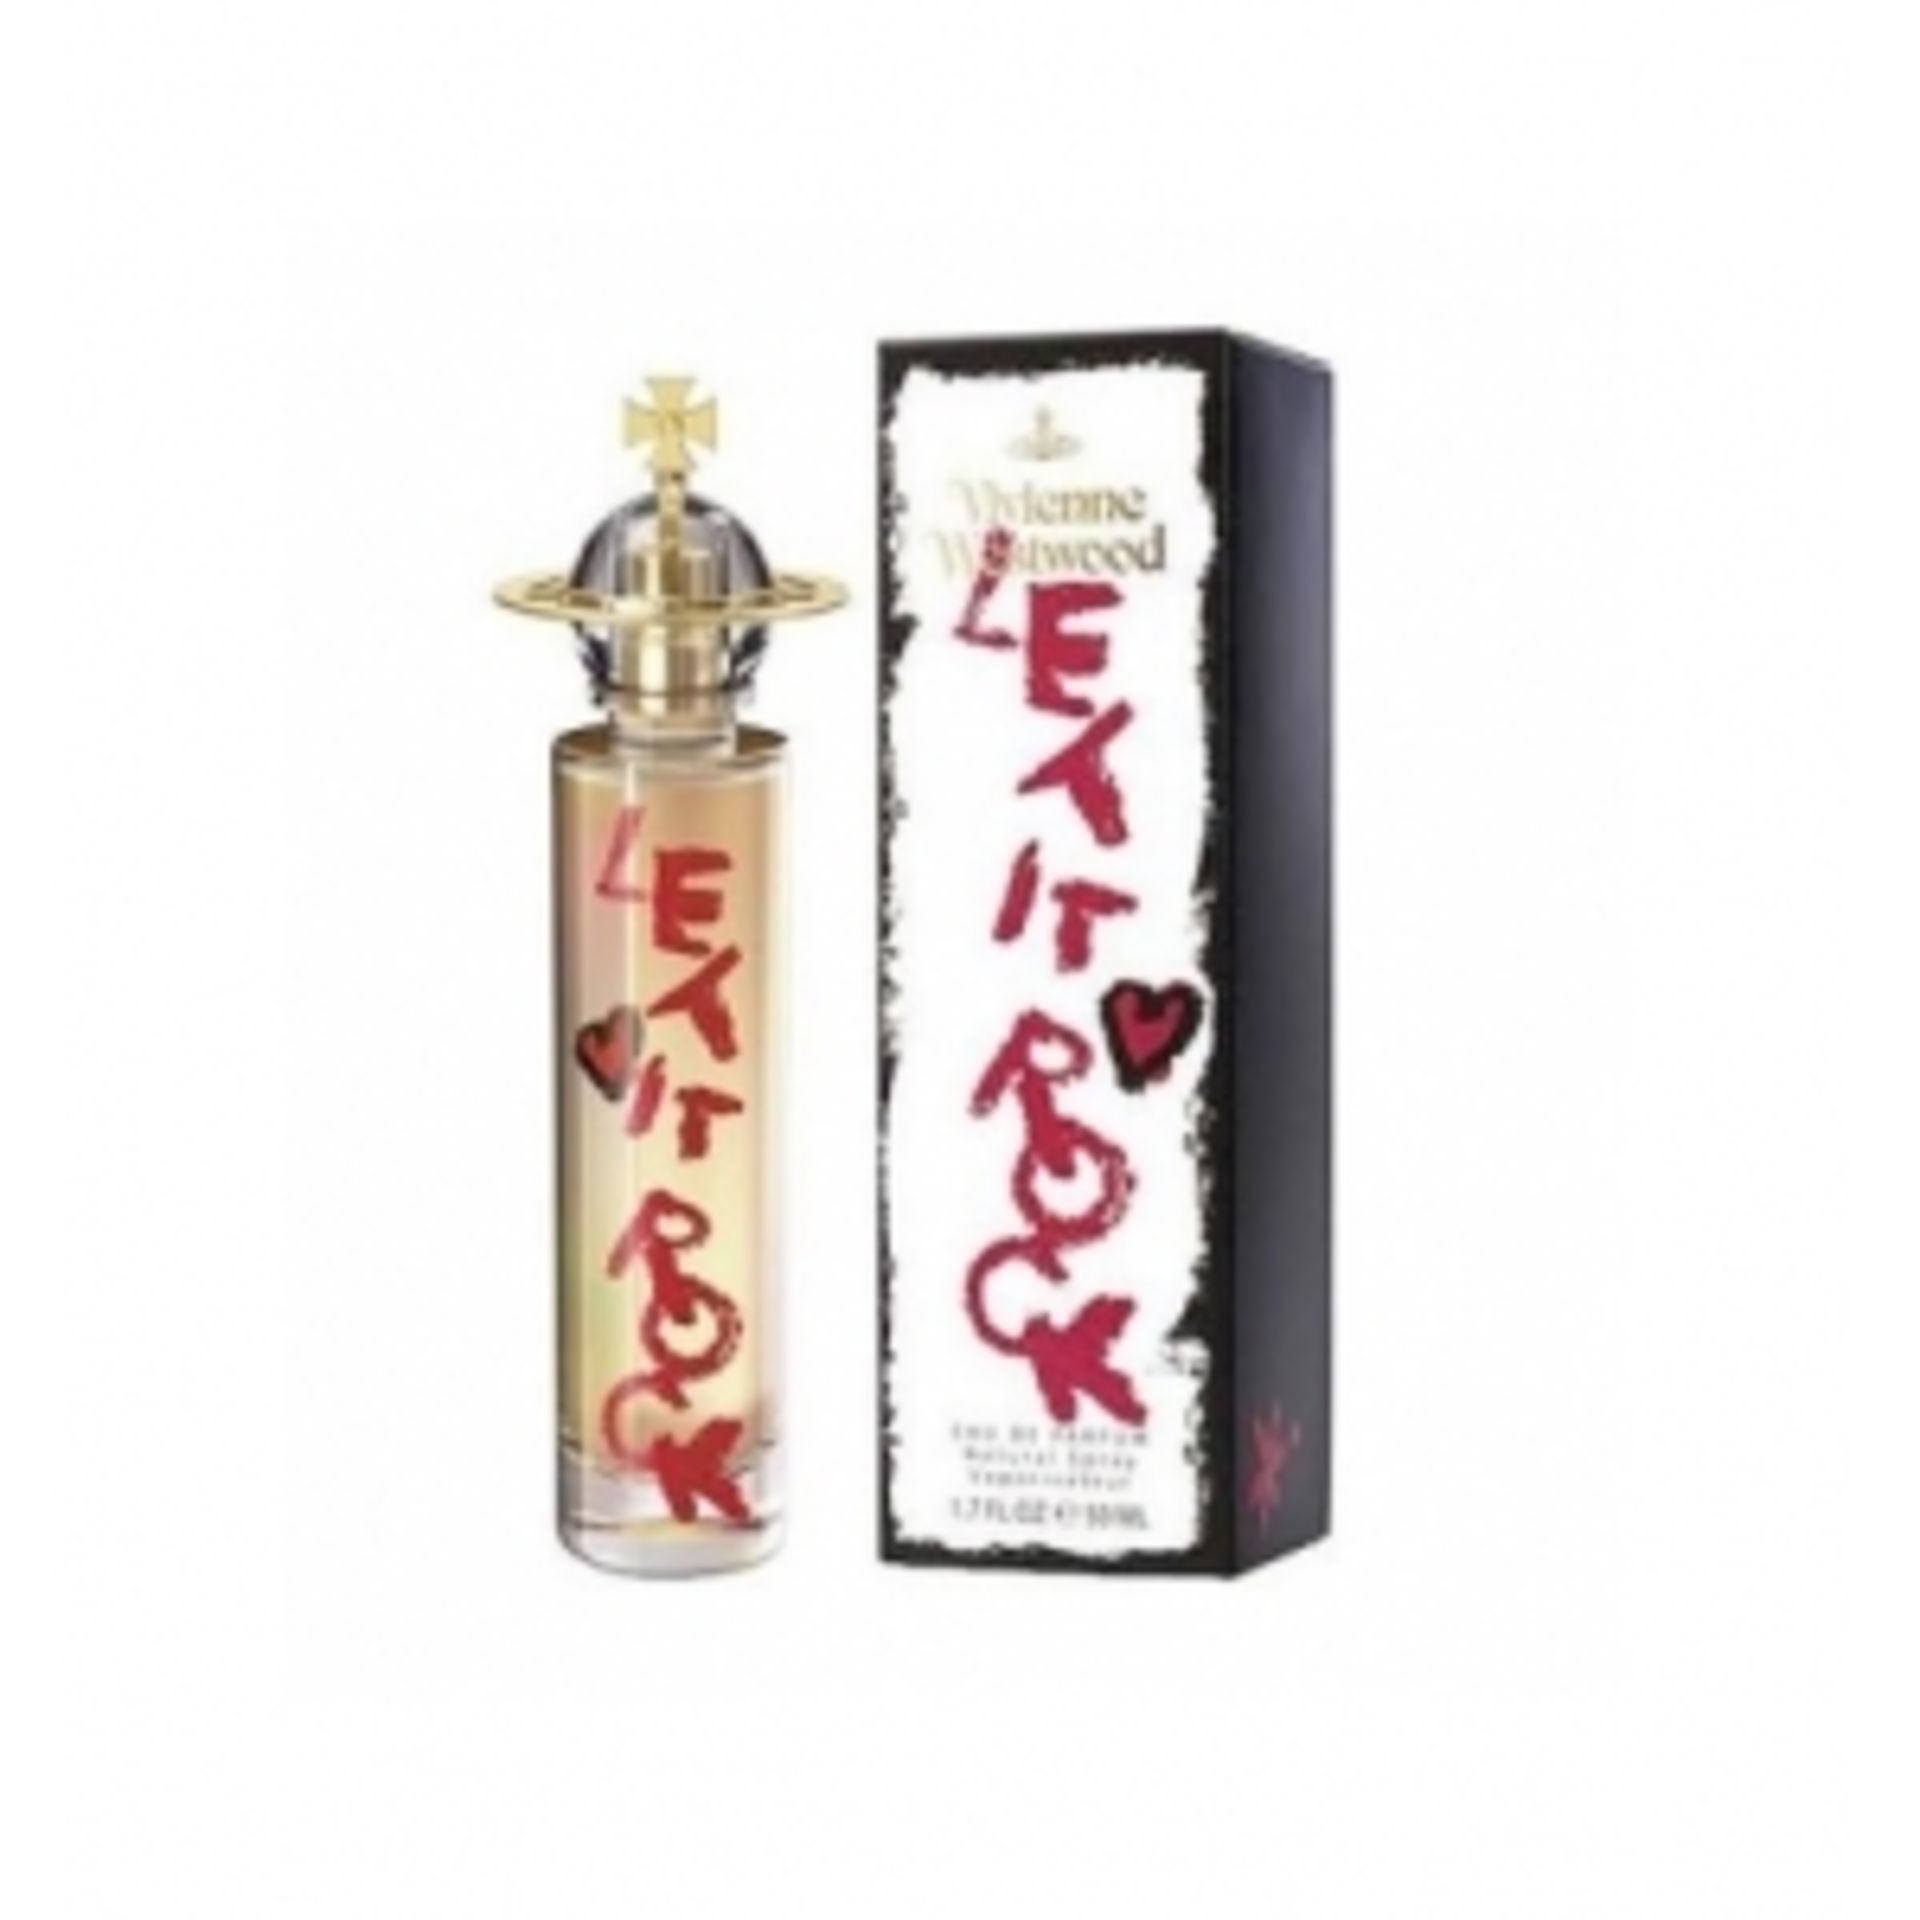 V Let It Rock Eau De Parfum by Vivienne Westwood 30ml X  2  Bid price to be multiplied by Two